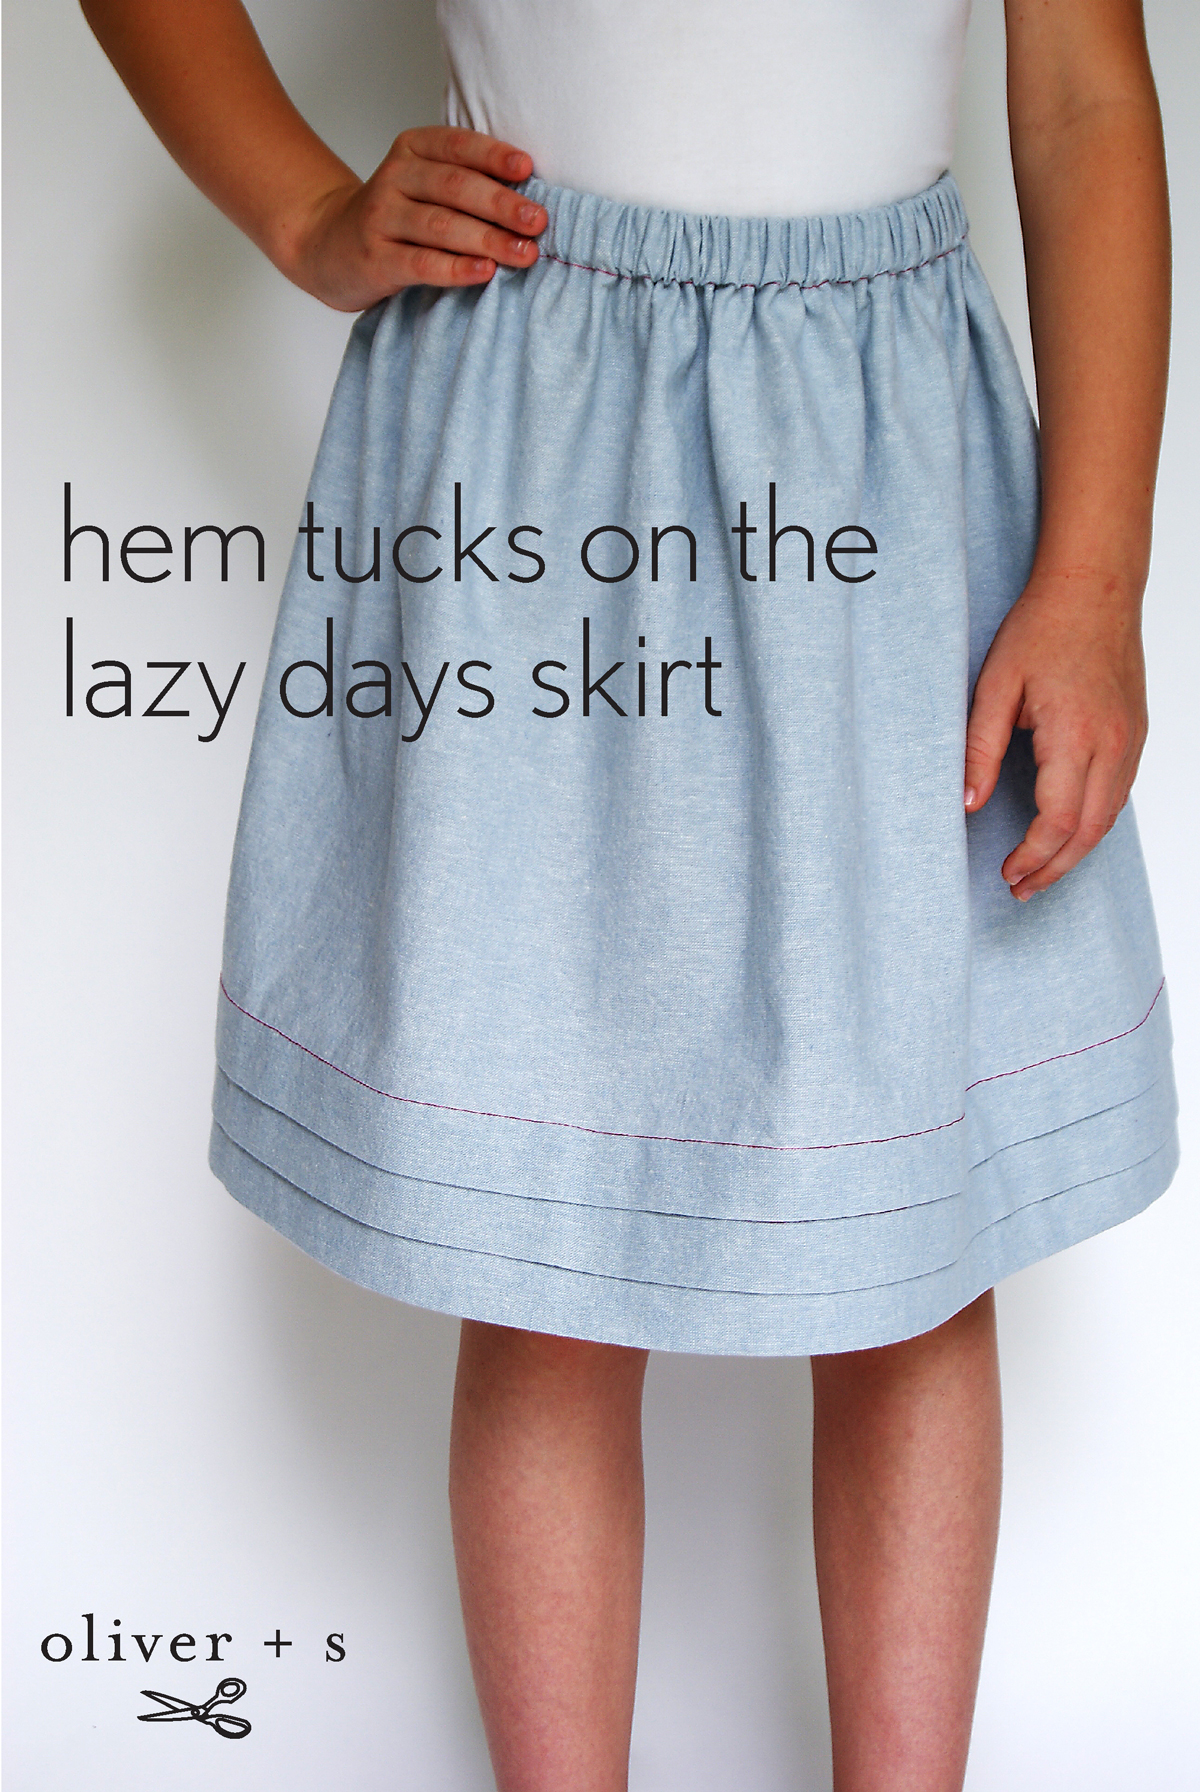 Adding Hem Tucks to the Lazy Days Skirt | Blog | Oliver + S